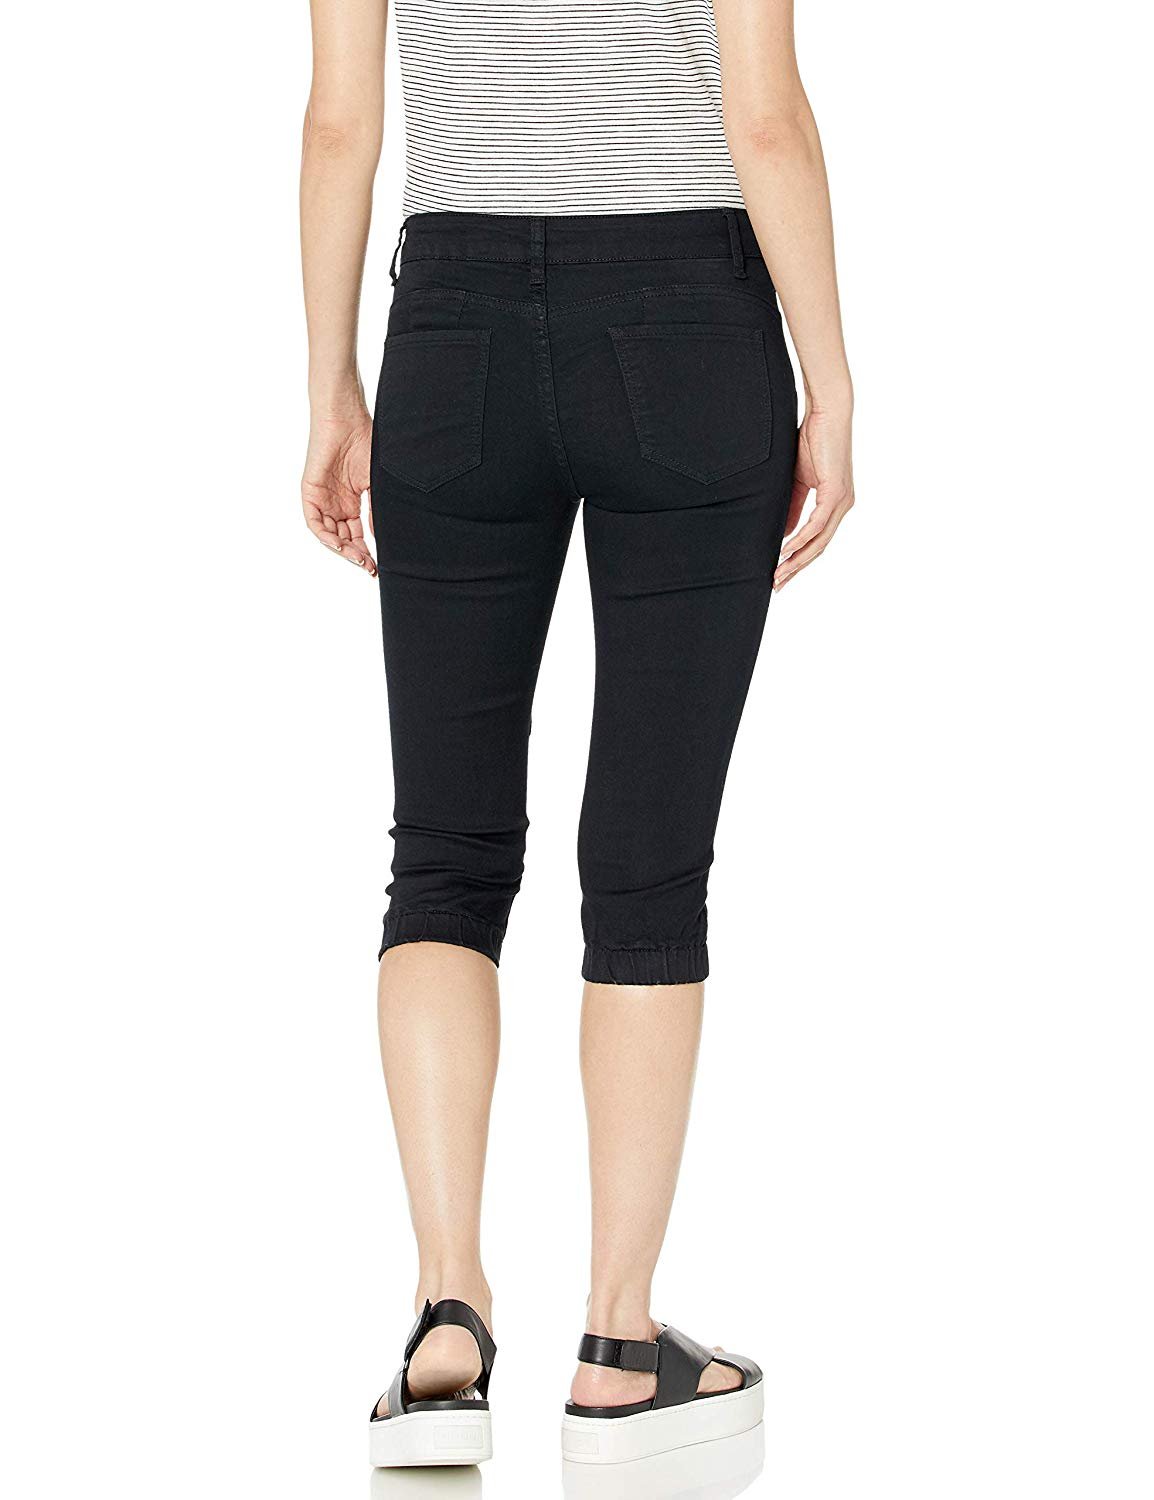 Cute Teen Girl Jeans Plus Size Capri Pants for Teen Girls in Black Denim Size 24W - image 3 of 4